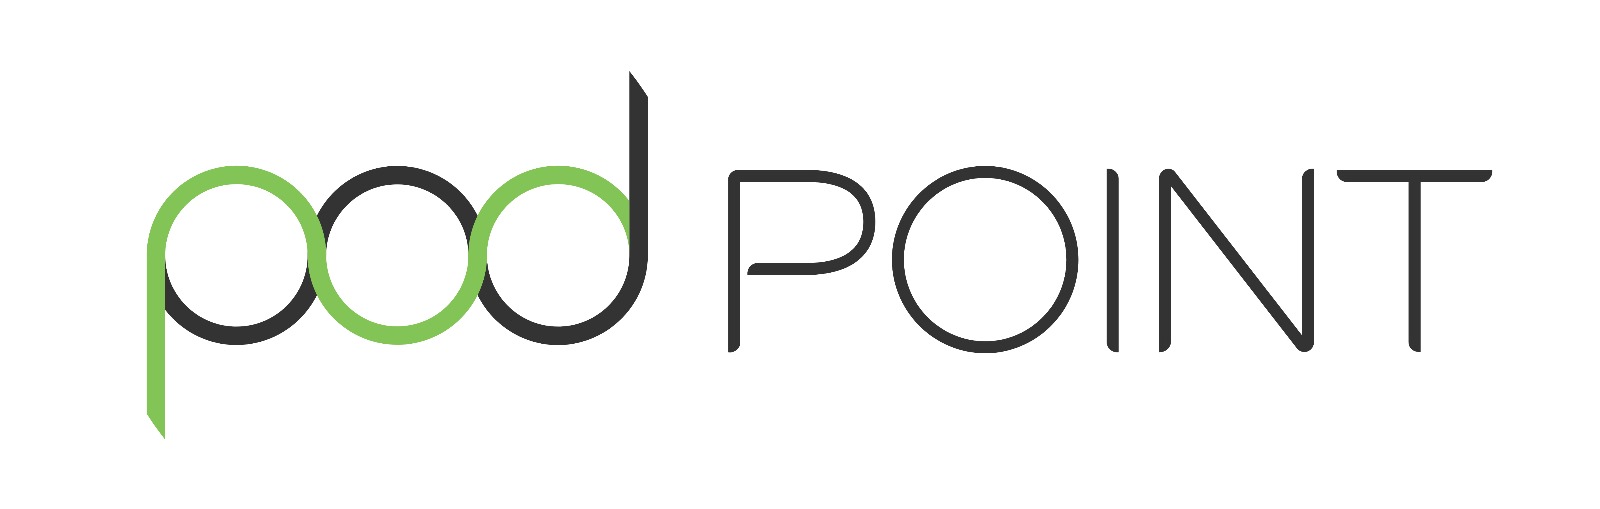 Pod Point logo (green & black)